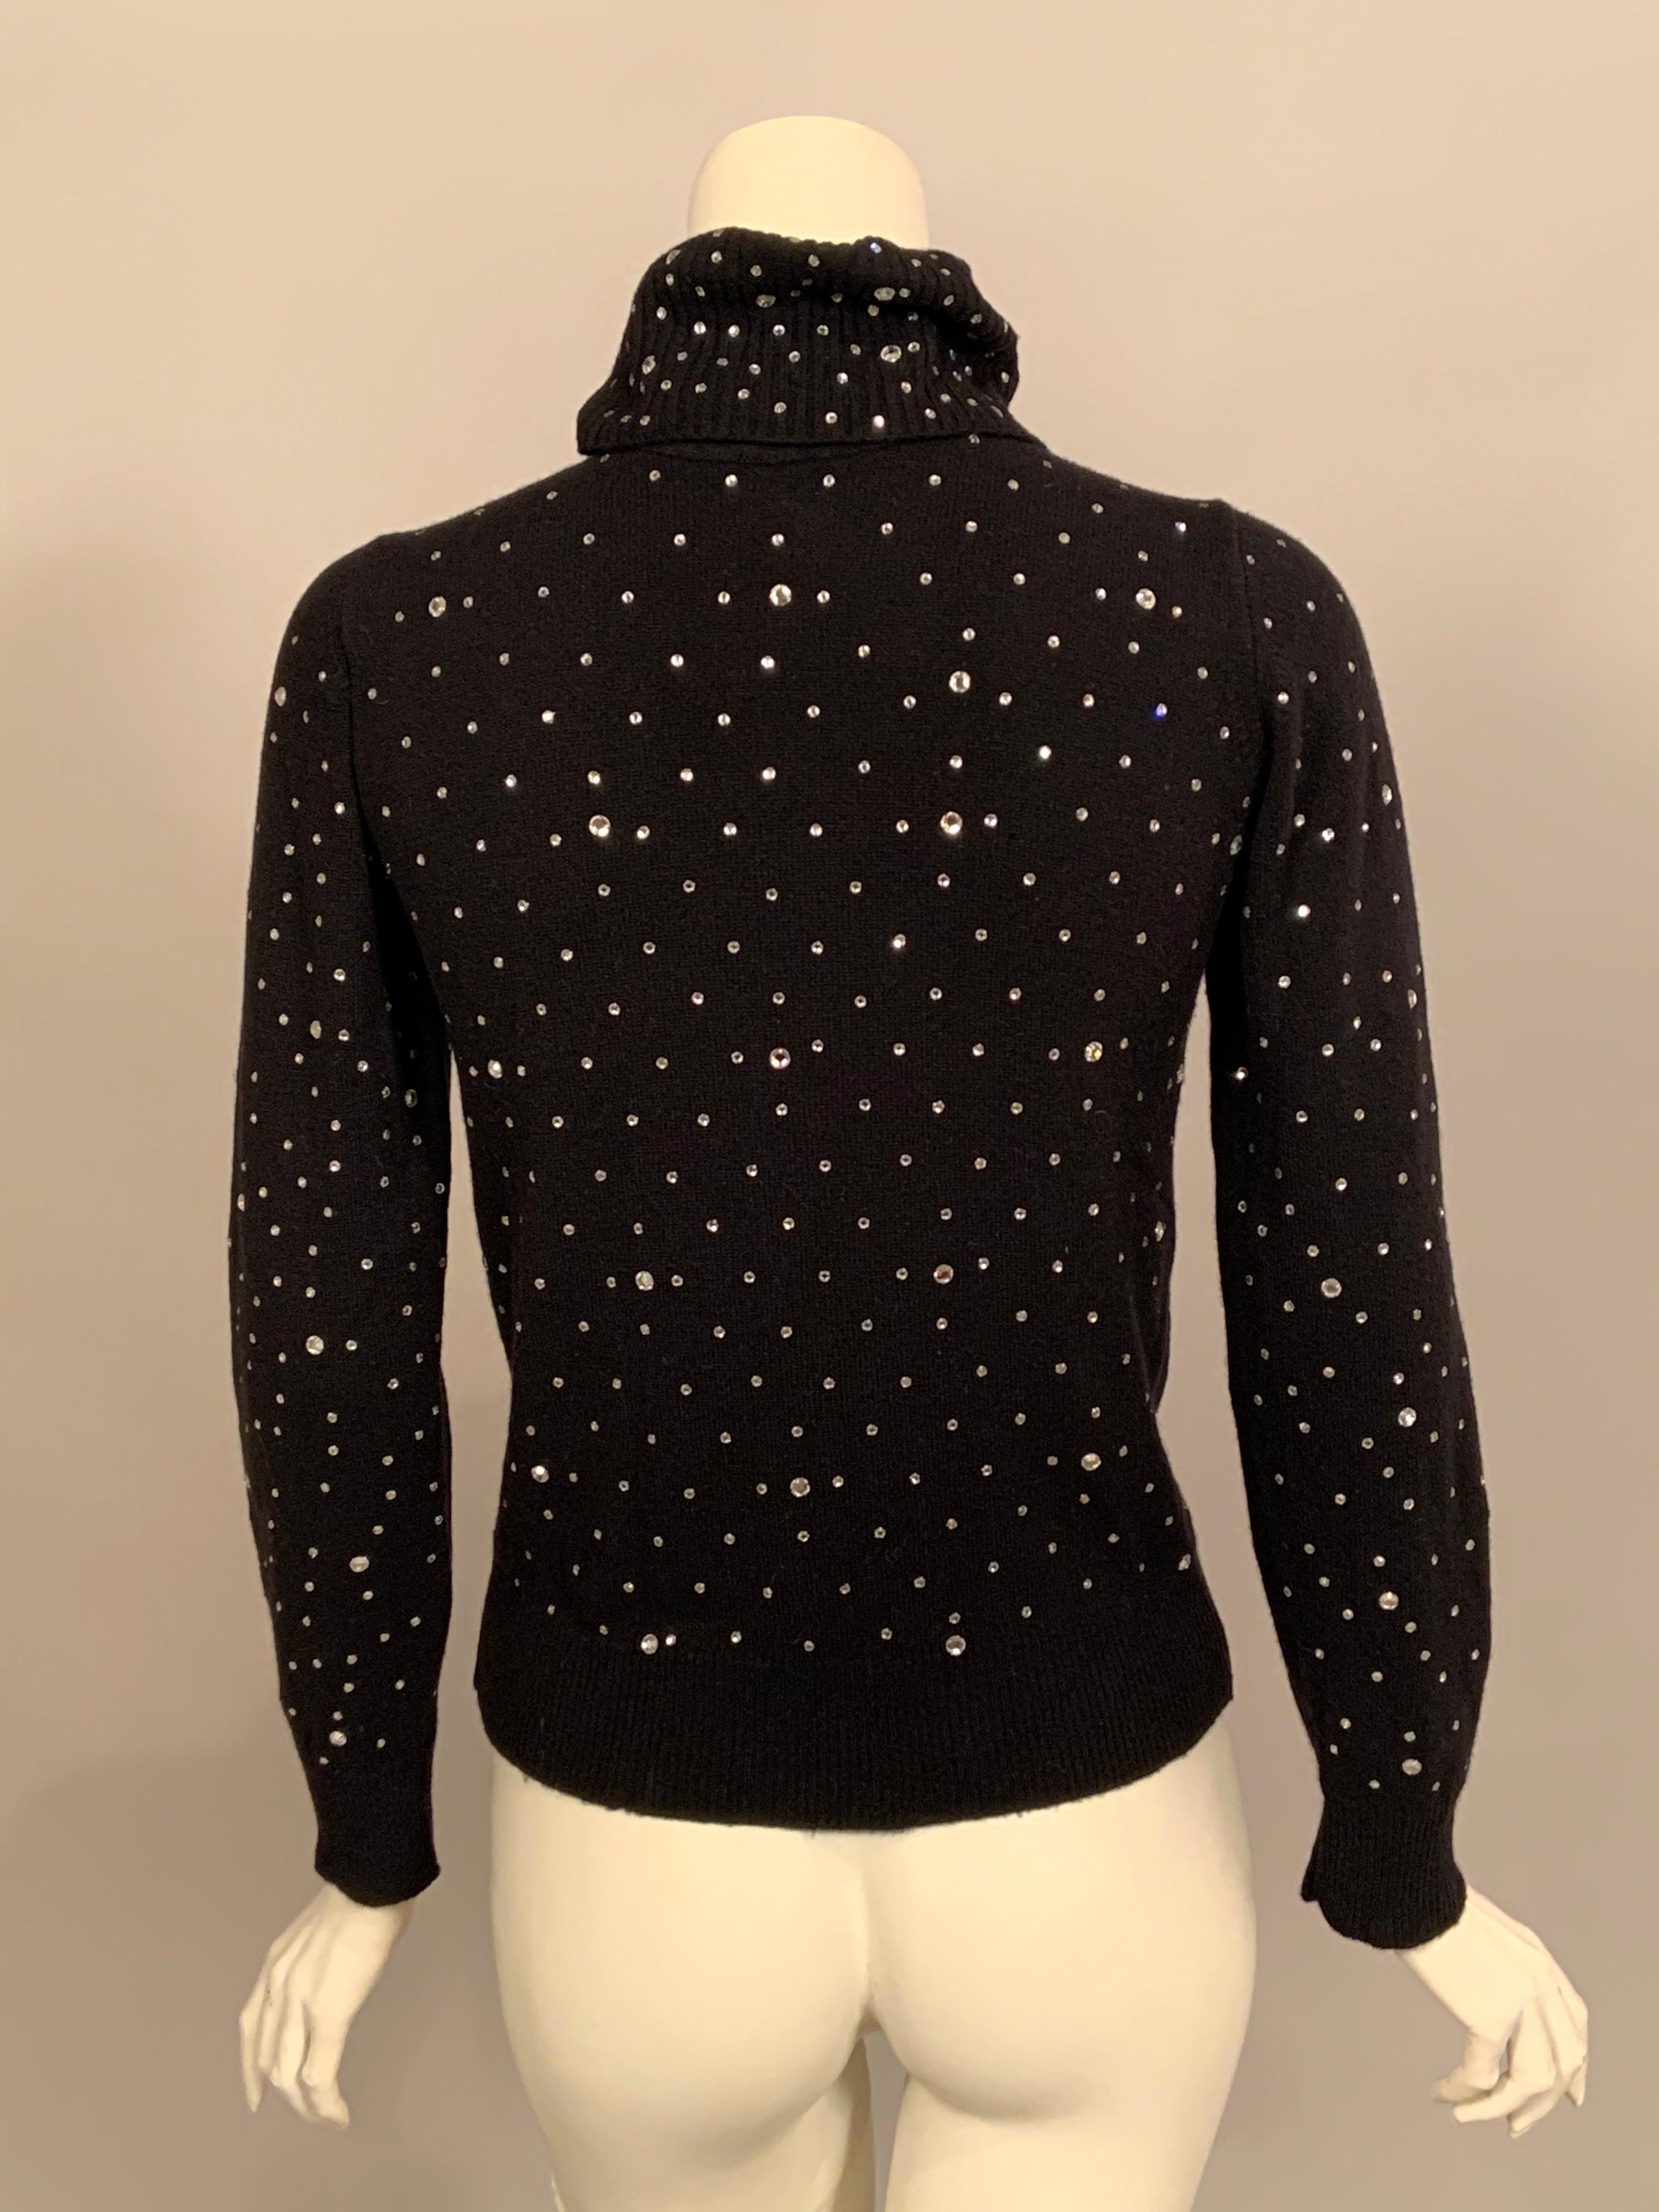 Women's Vintage Black Cashmere Turtleneck Sweater Sparkling with Rhinestone Decoration